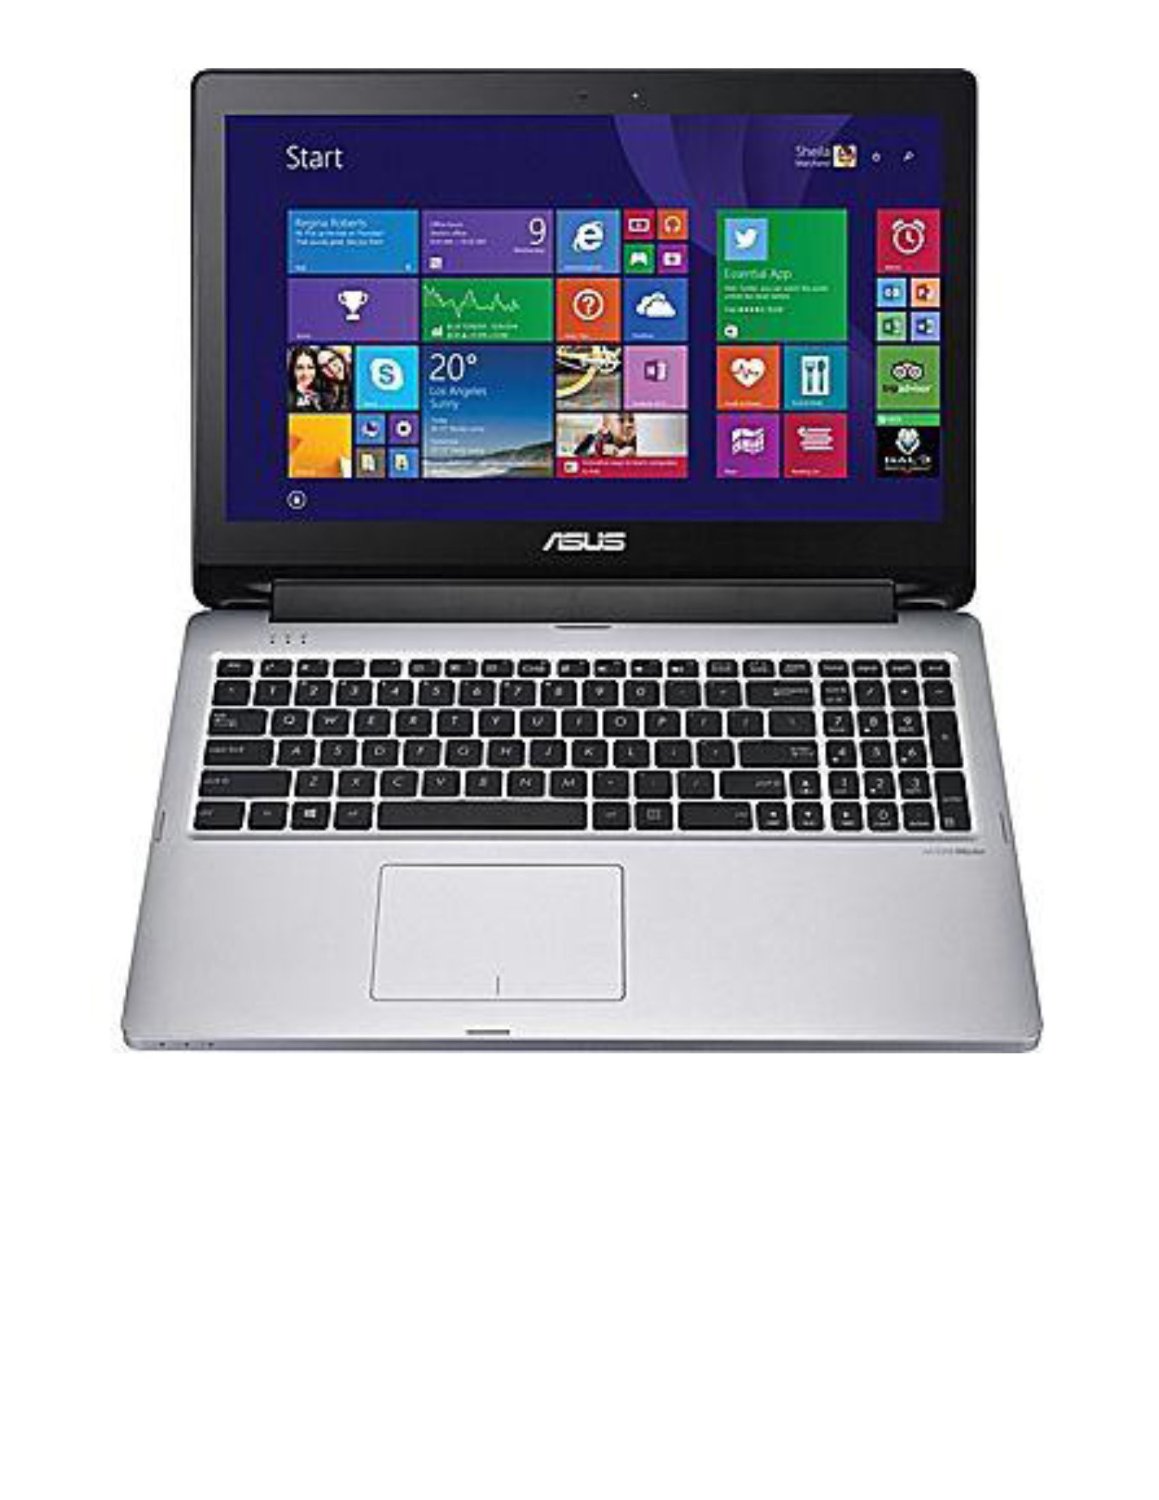 ASUS TP550LA-RHI5T01 Touchscreen 15.6-inch Convertible Laptop